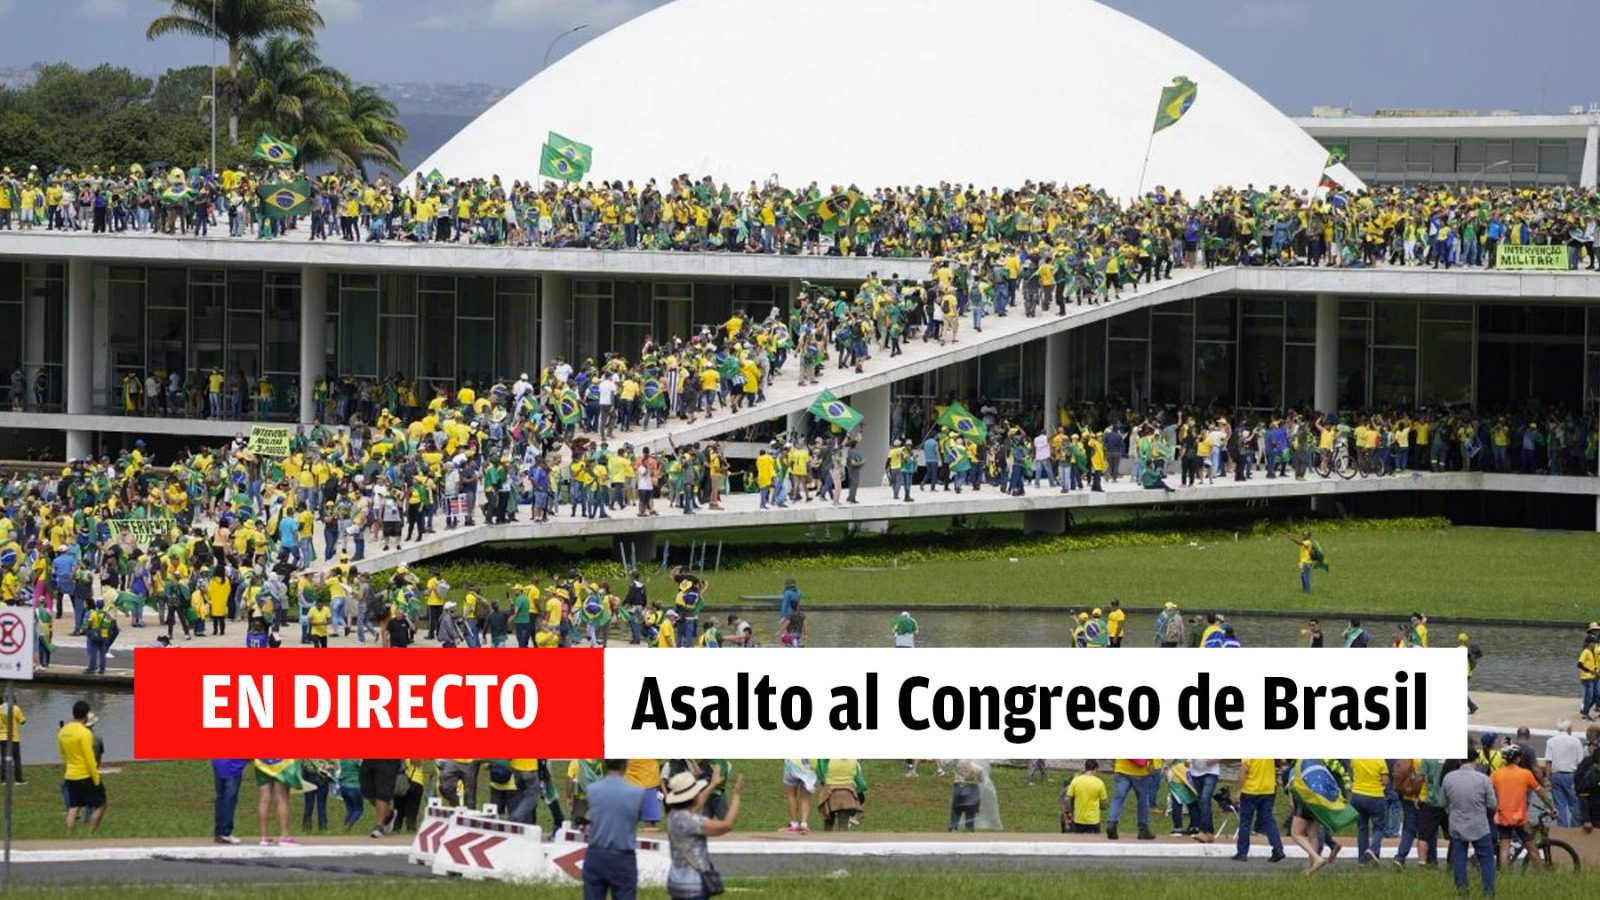 Asalto al Congreso de Brasil en directo